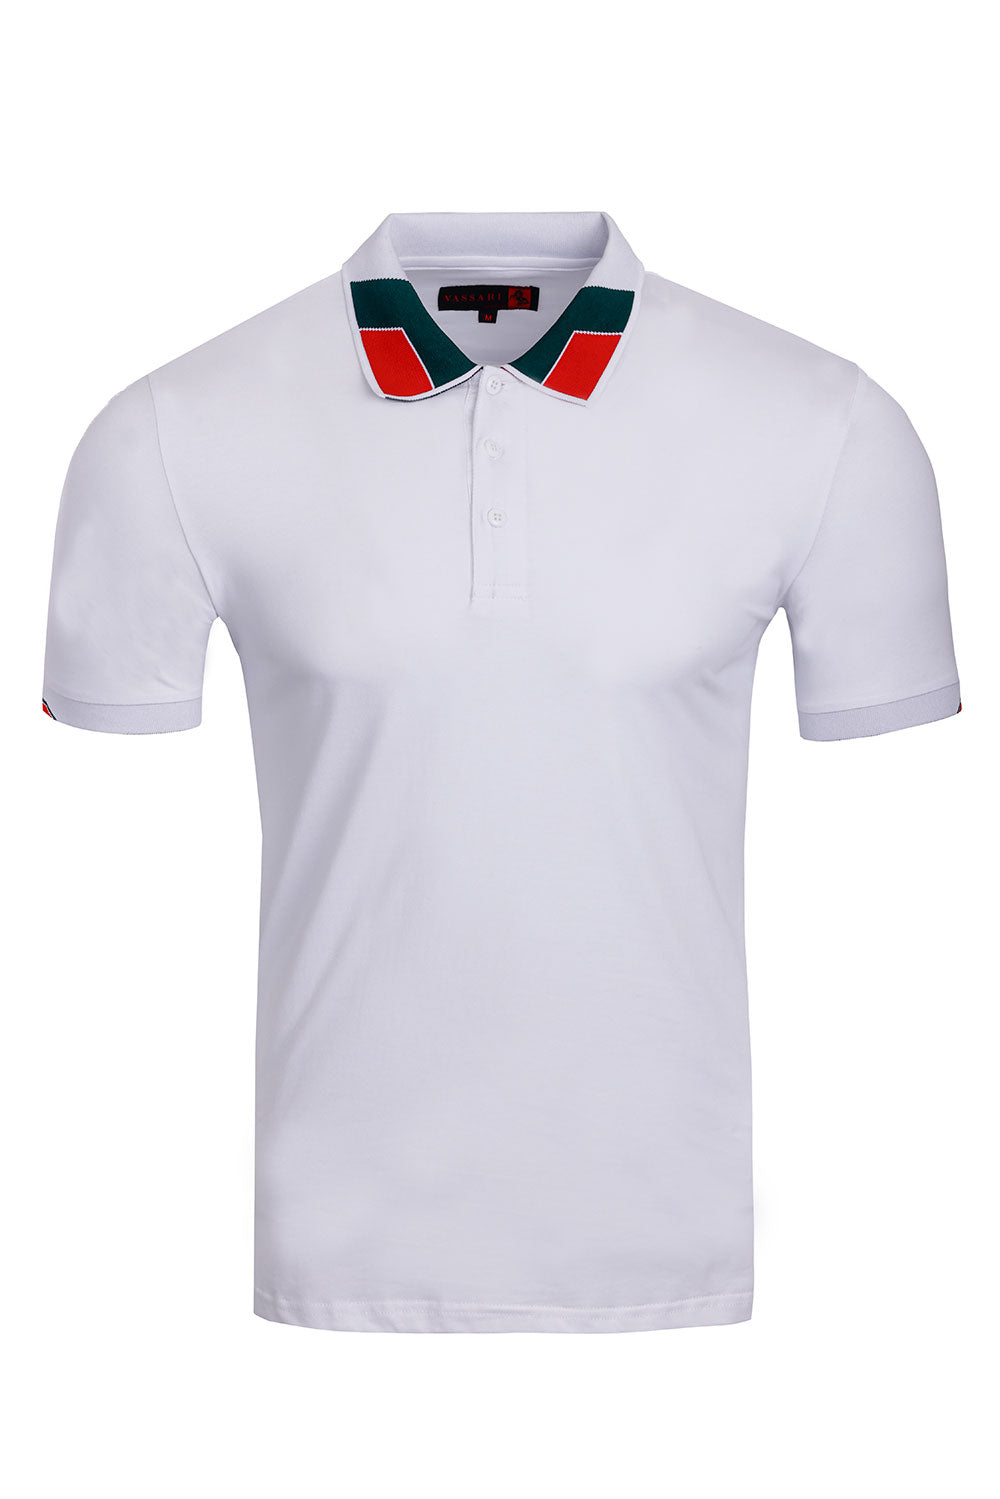 Vassari Men's Collar Color Pattern Stretch Polo Shirt 3VP636 White